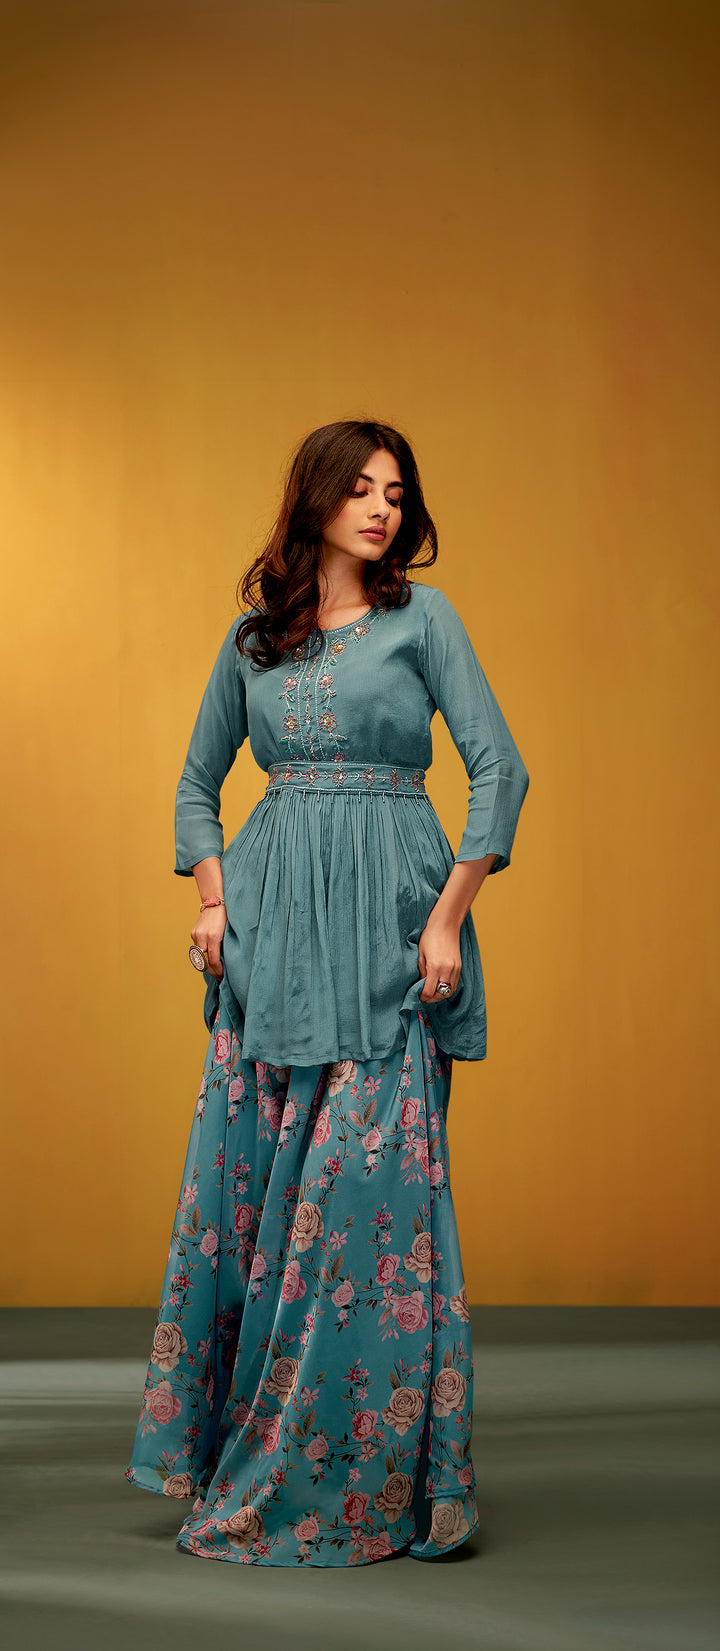 Alaya Powder Blue Full Work Top & Floral Skirt Set